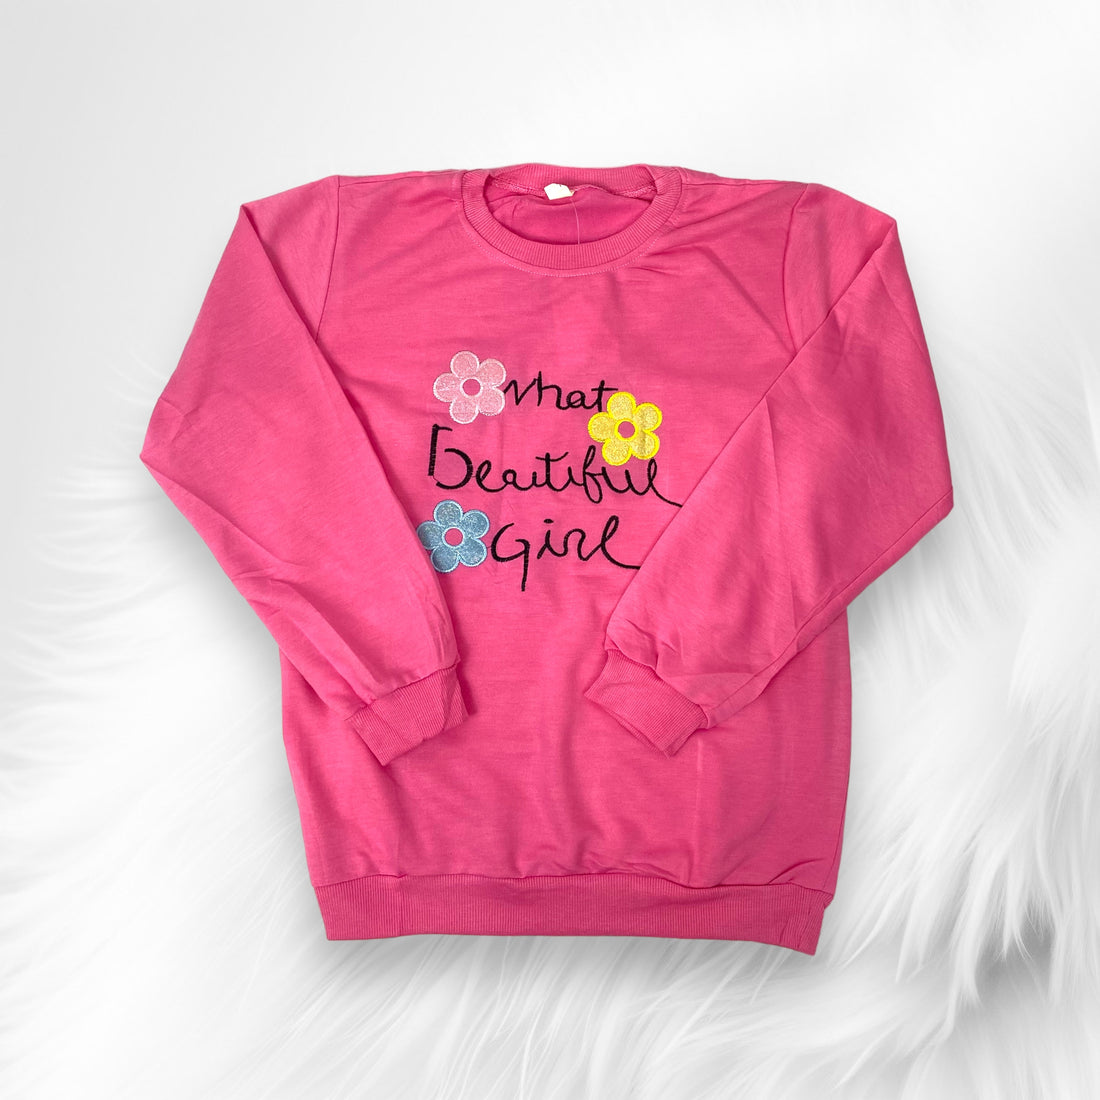 340324-V1] - Baju Atasan Sweater Fashion Import Anak Perempuan - Motif Beautiful Writing